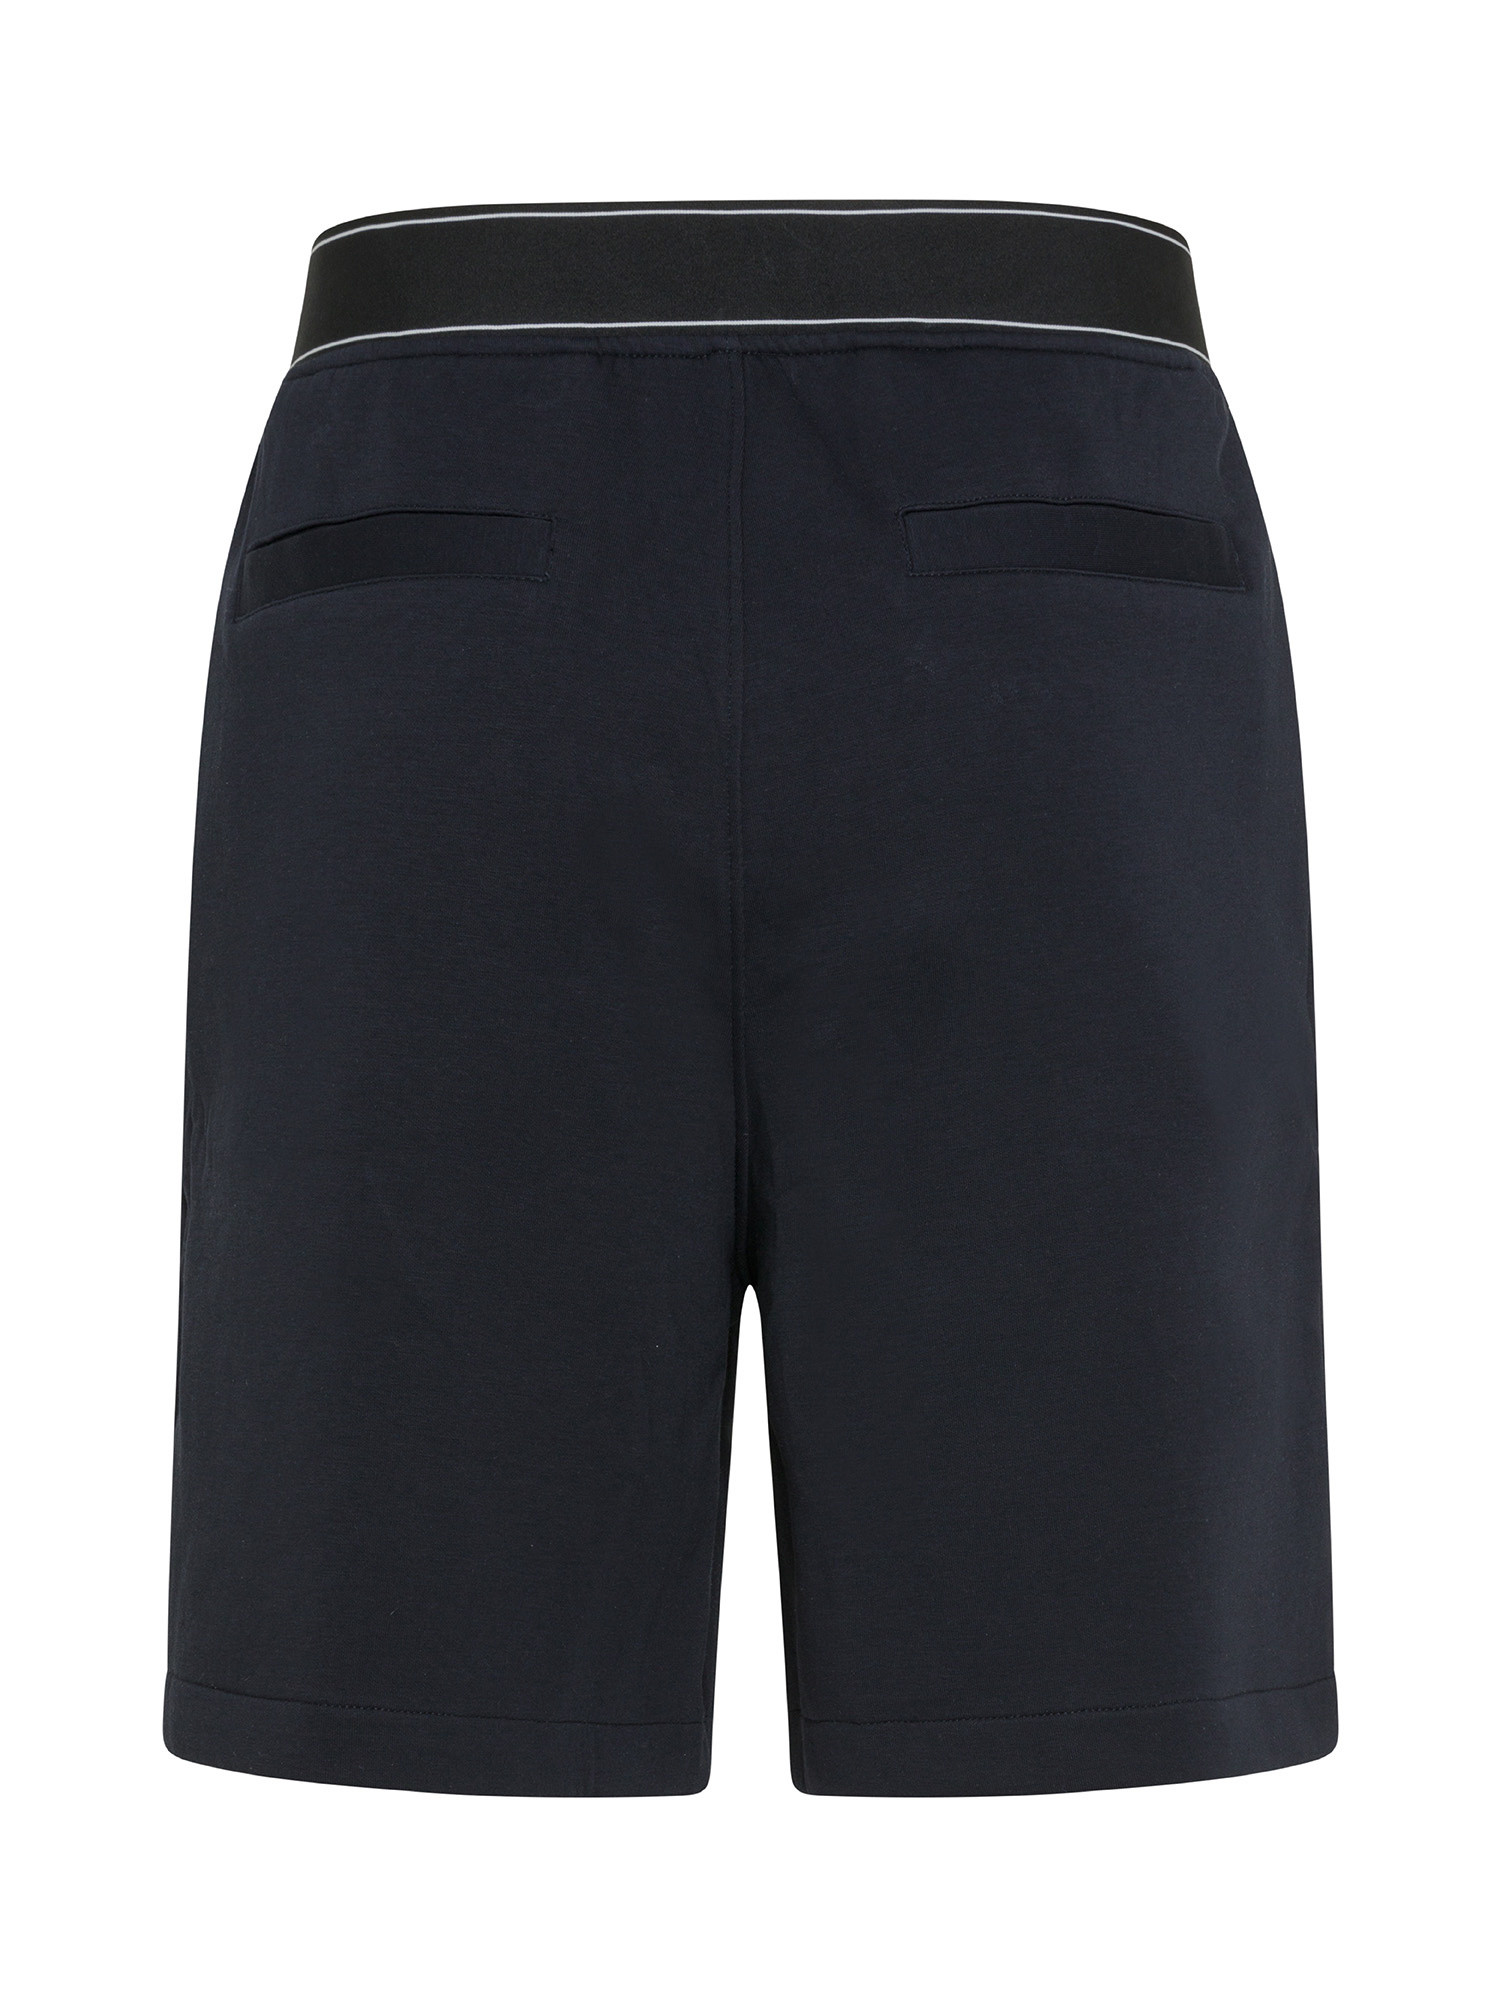 Emporio Armani - Bermuda shorts with logo, Dark Blue, large image number 1